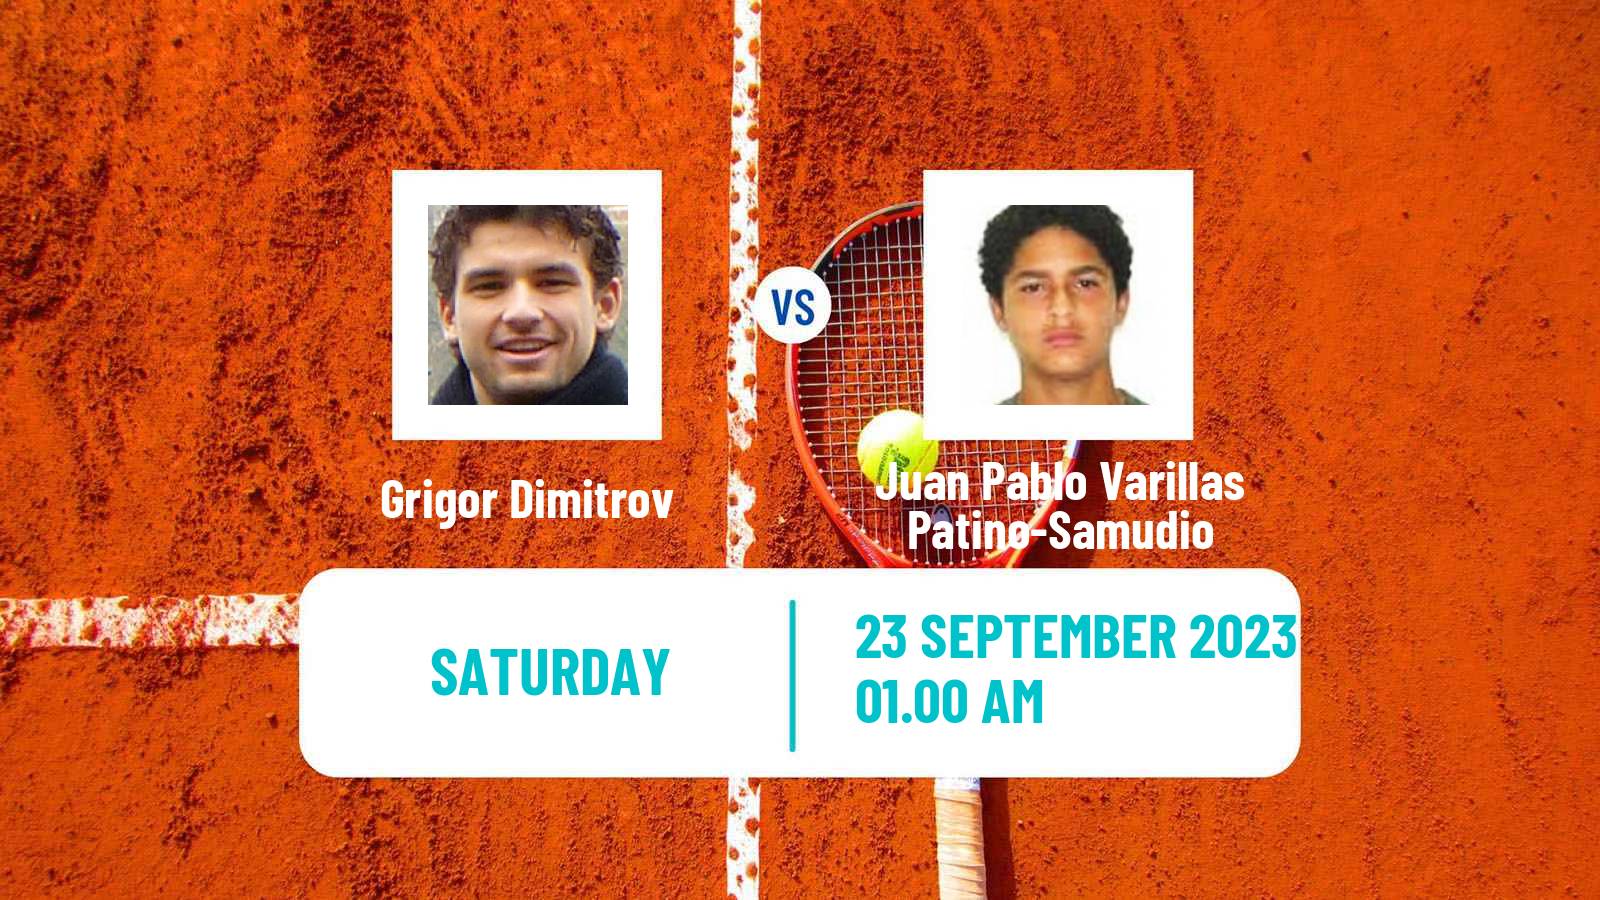 Tennis ATP Chengdu Grigor Dimitrov - Juan Pablo Varillas Patino-Samudio